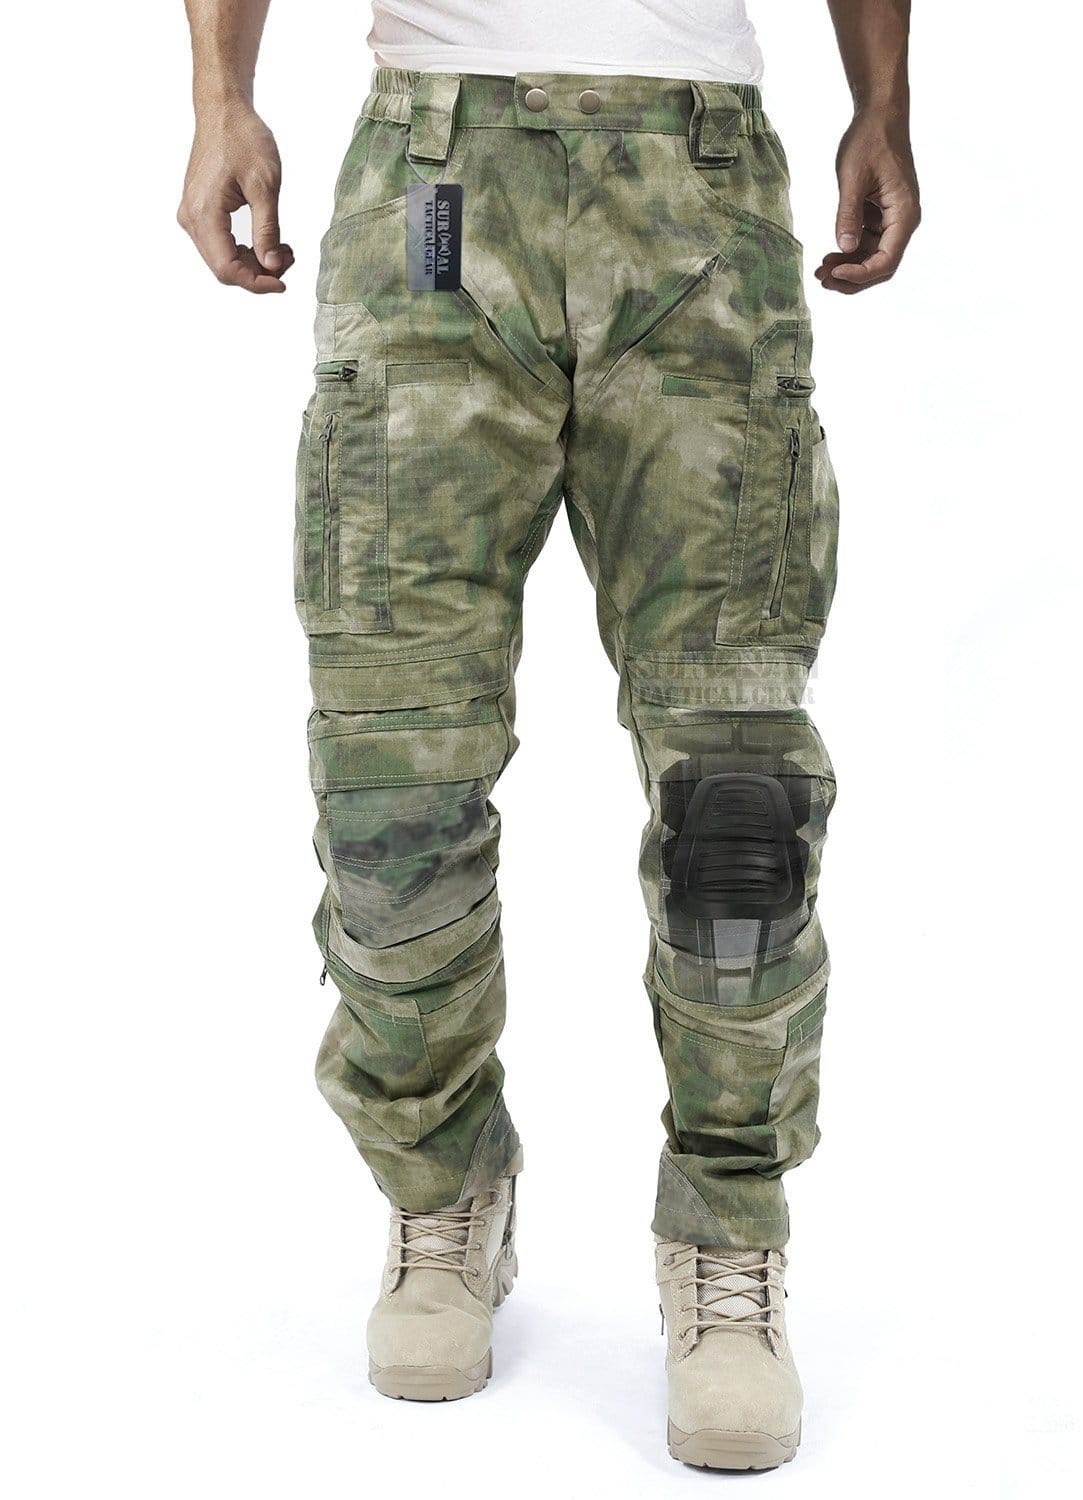 Airsoft Wargame Tactical Pants